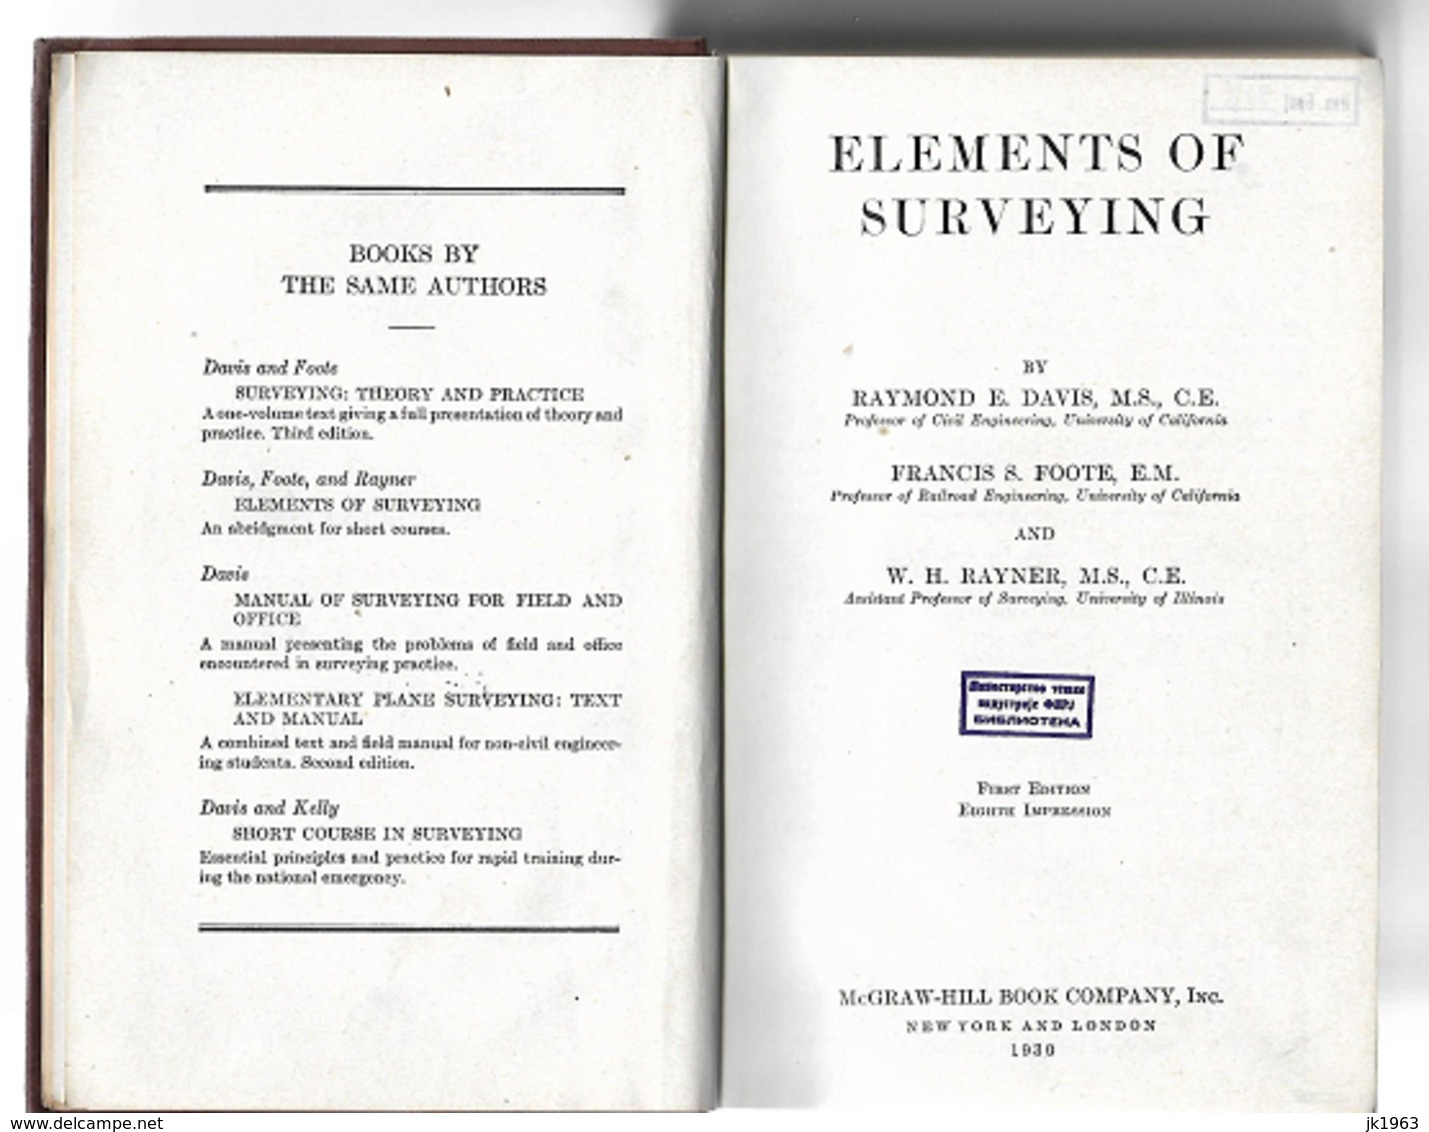 Davis, Raymond E., Francis S. Foote, W. H. Rayner, ELEMENTS OF SURVEYING, New York 1930 - 1900-1949